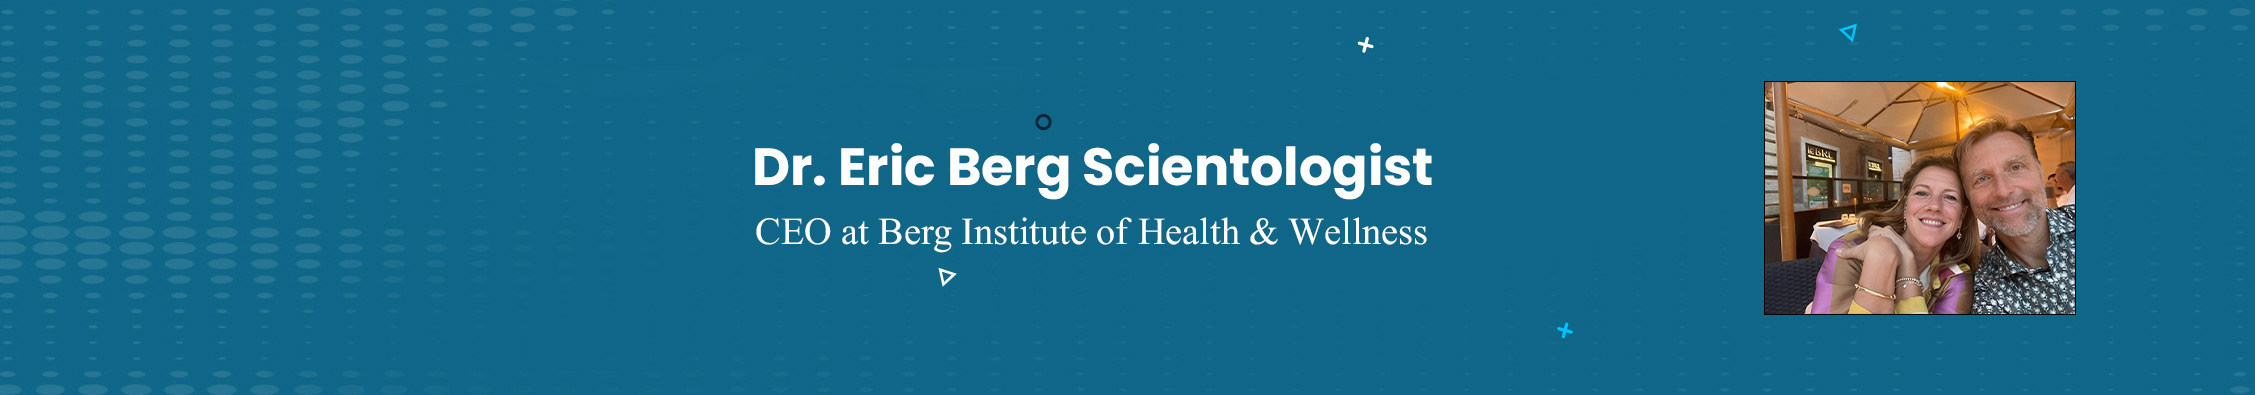 Dr. Eric Berg Scientologist's profile banner